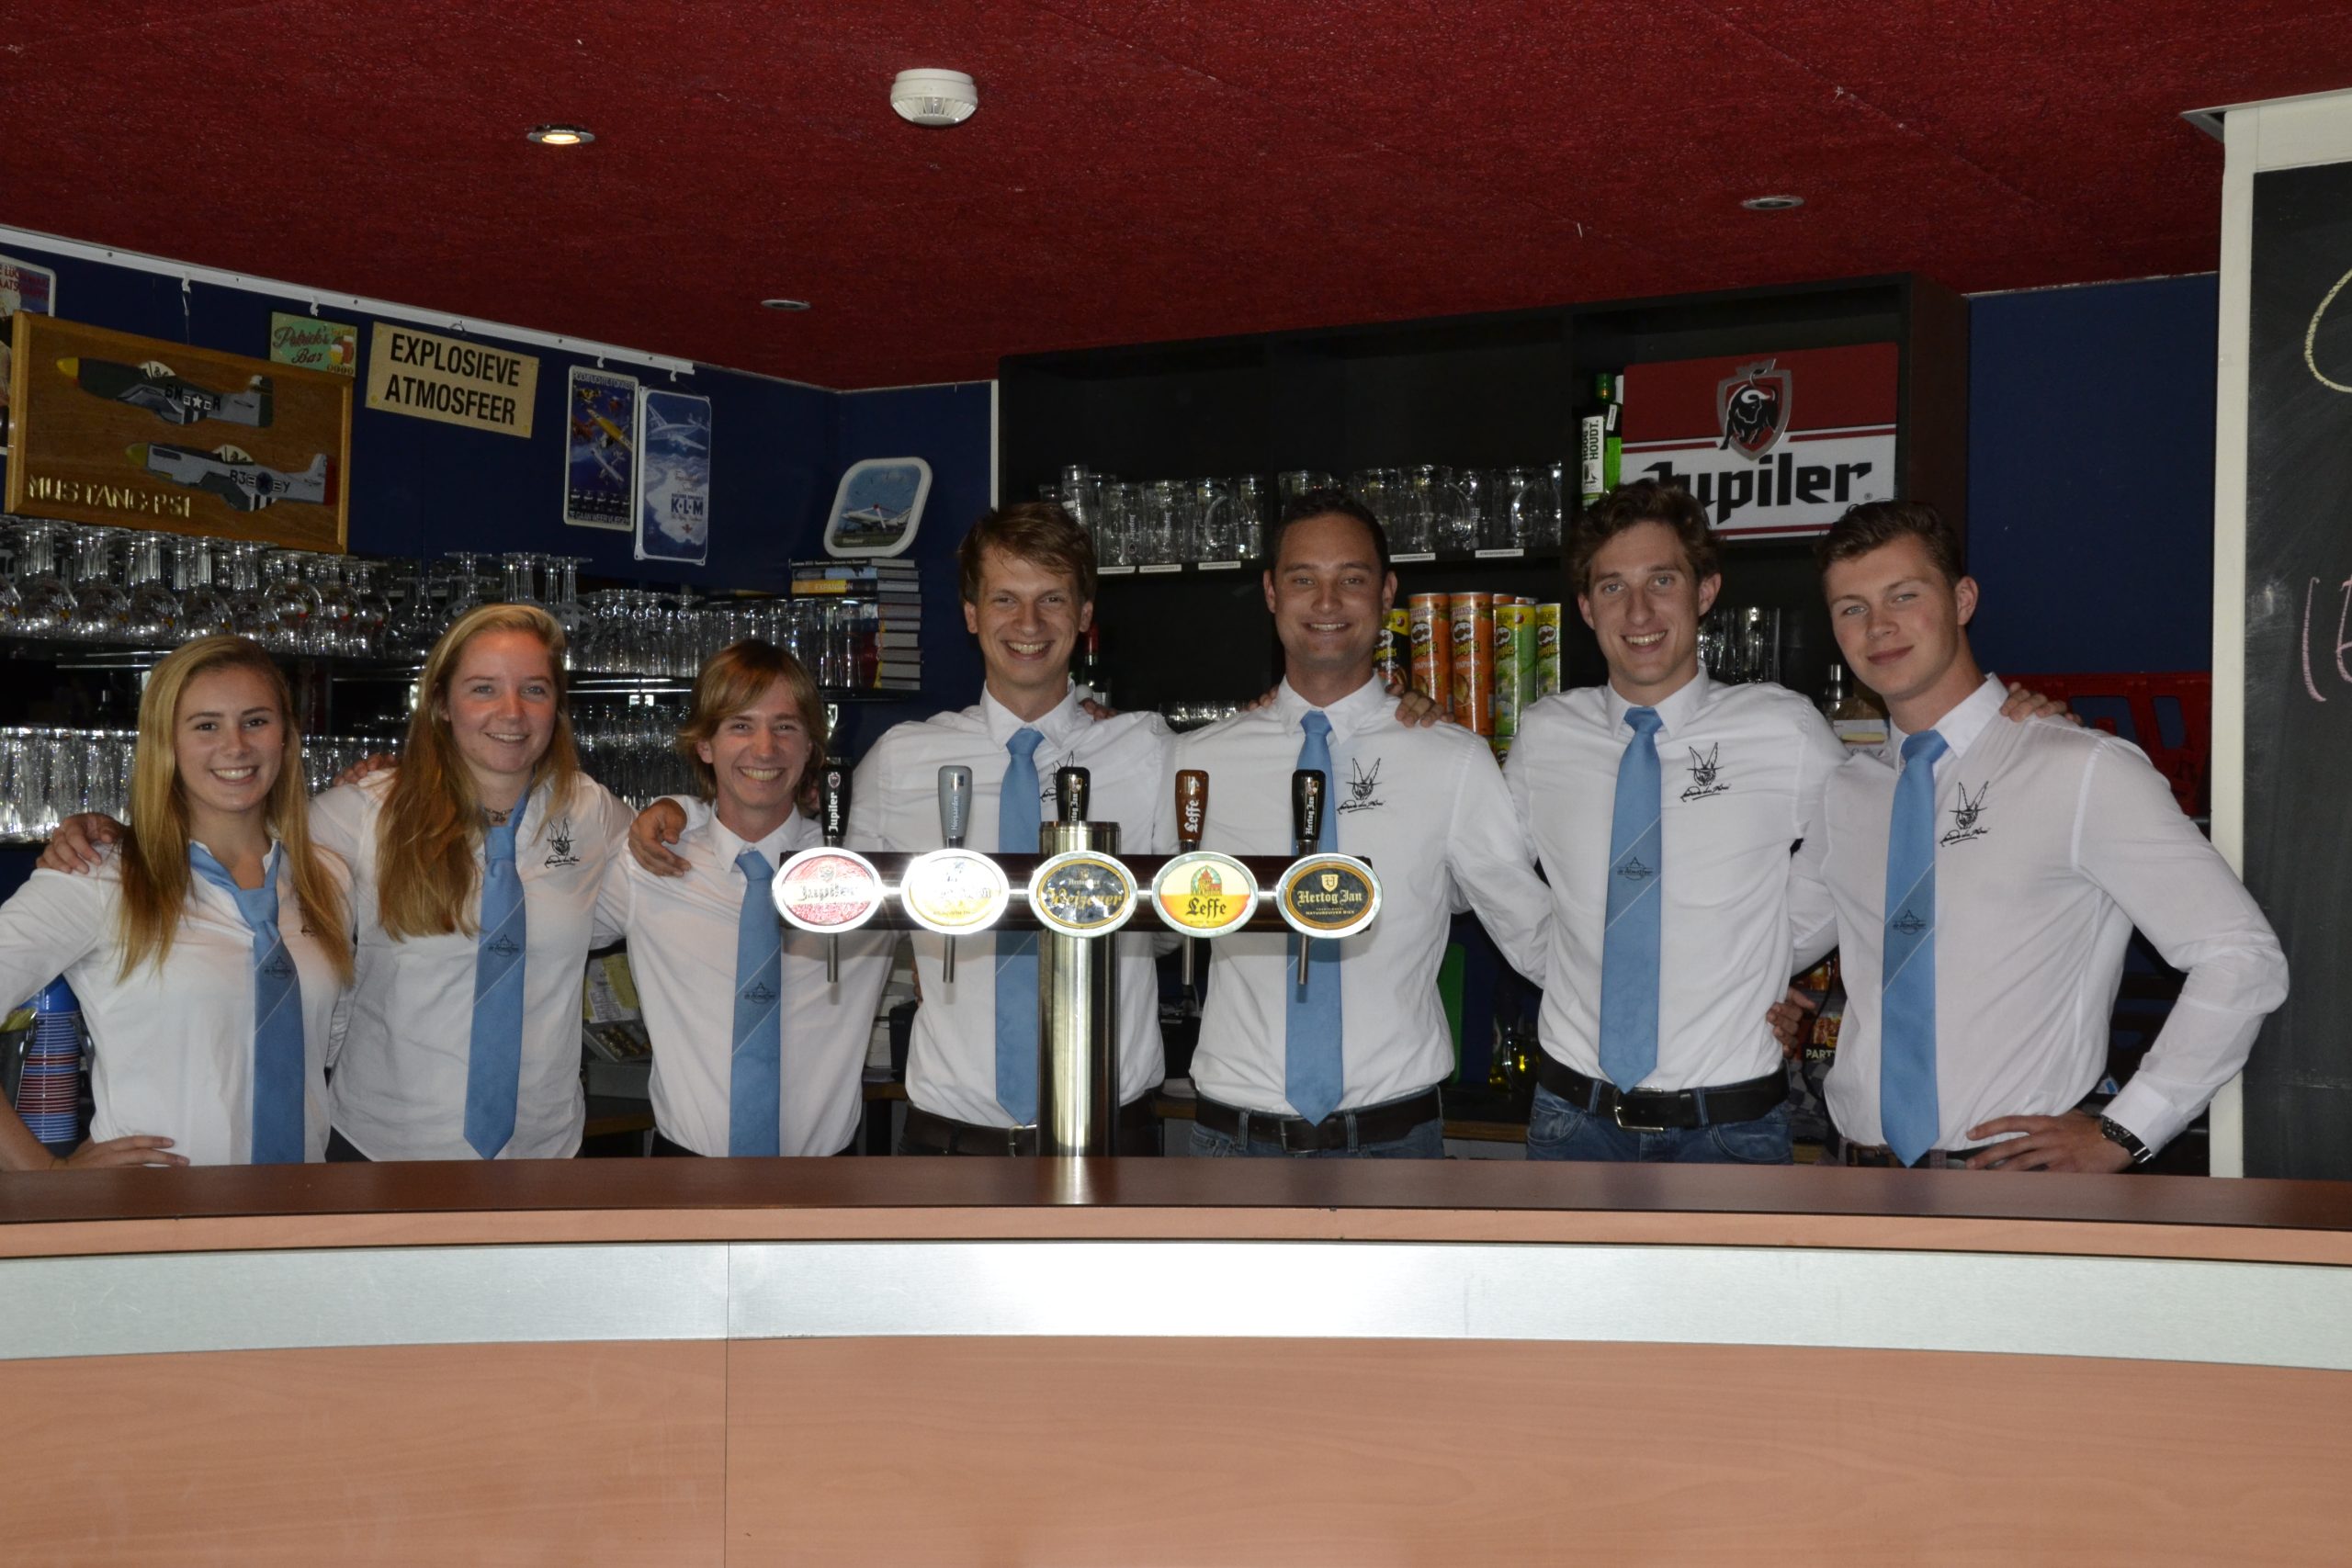 From left to right: Megan, Rosemijn, Gijs, Max, Mels, Patrick, Mathijs